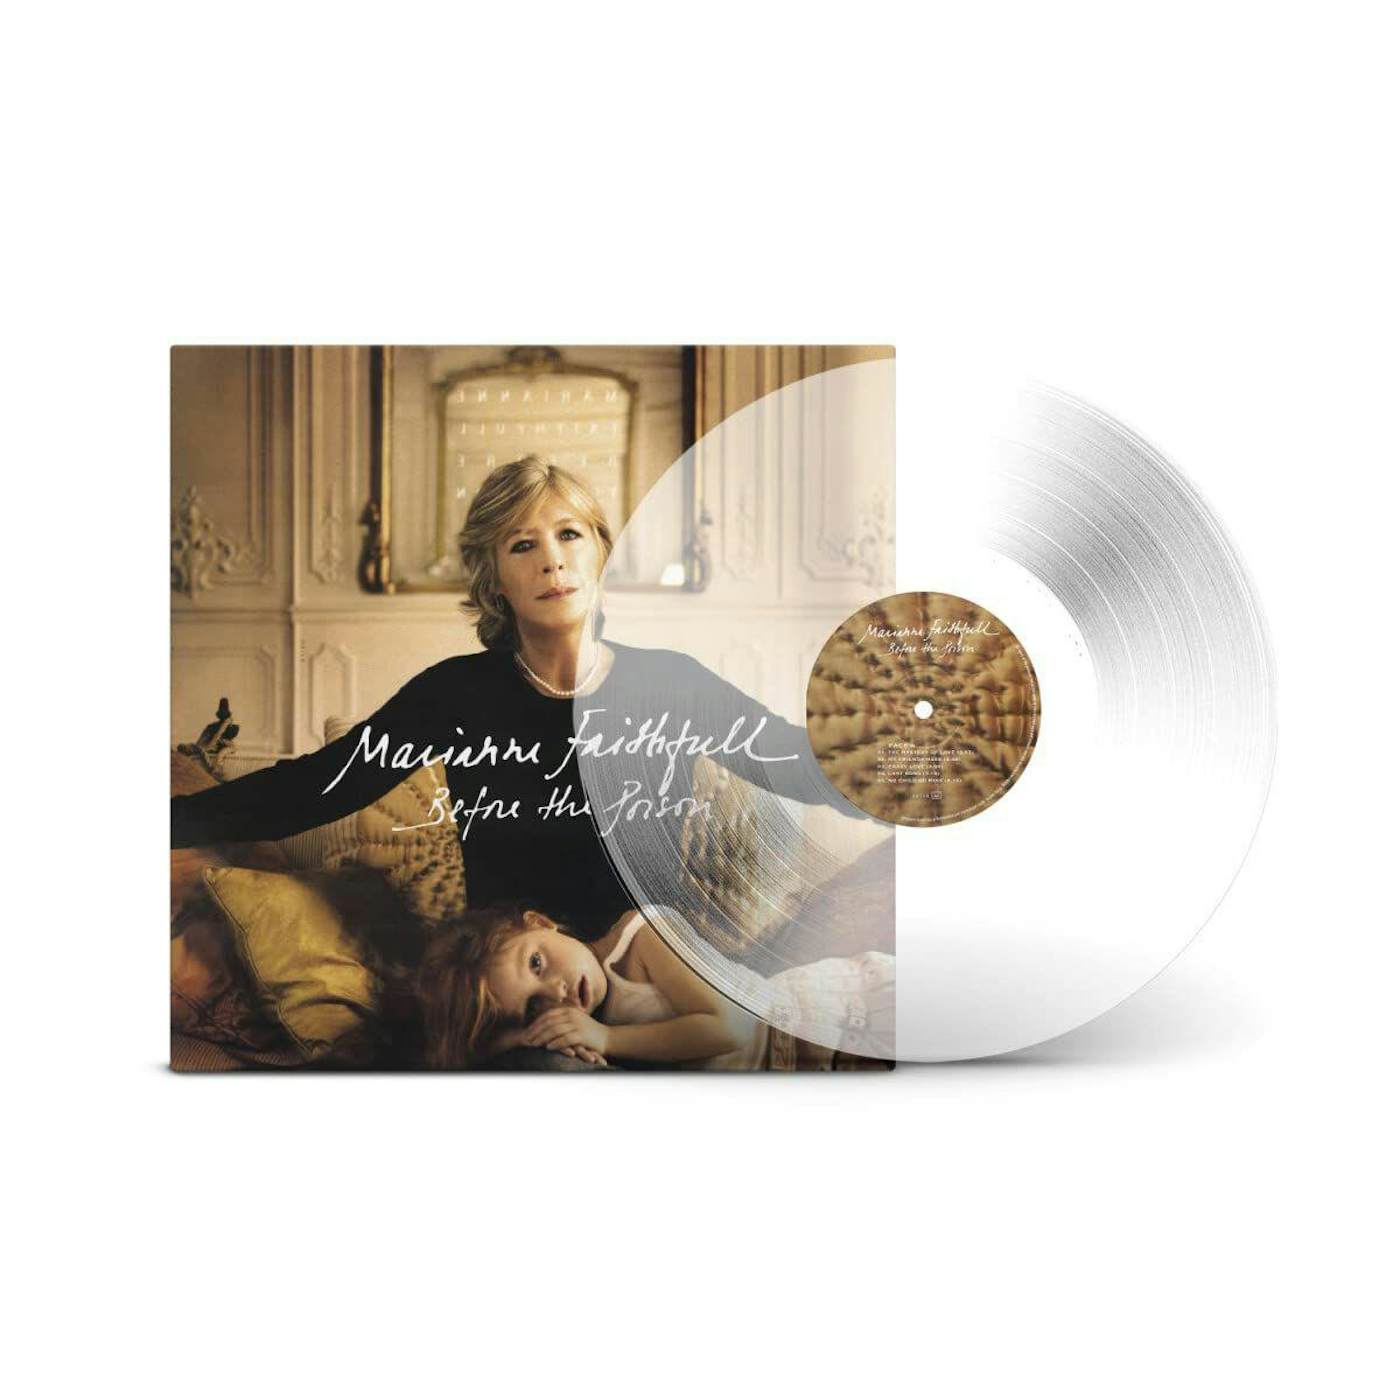 Marianne Faithfull Before The Poison (Clear Vinyl Record)